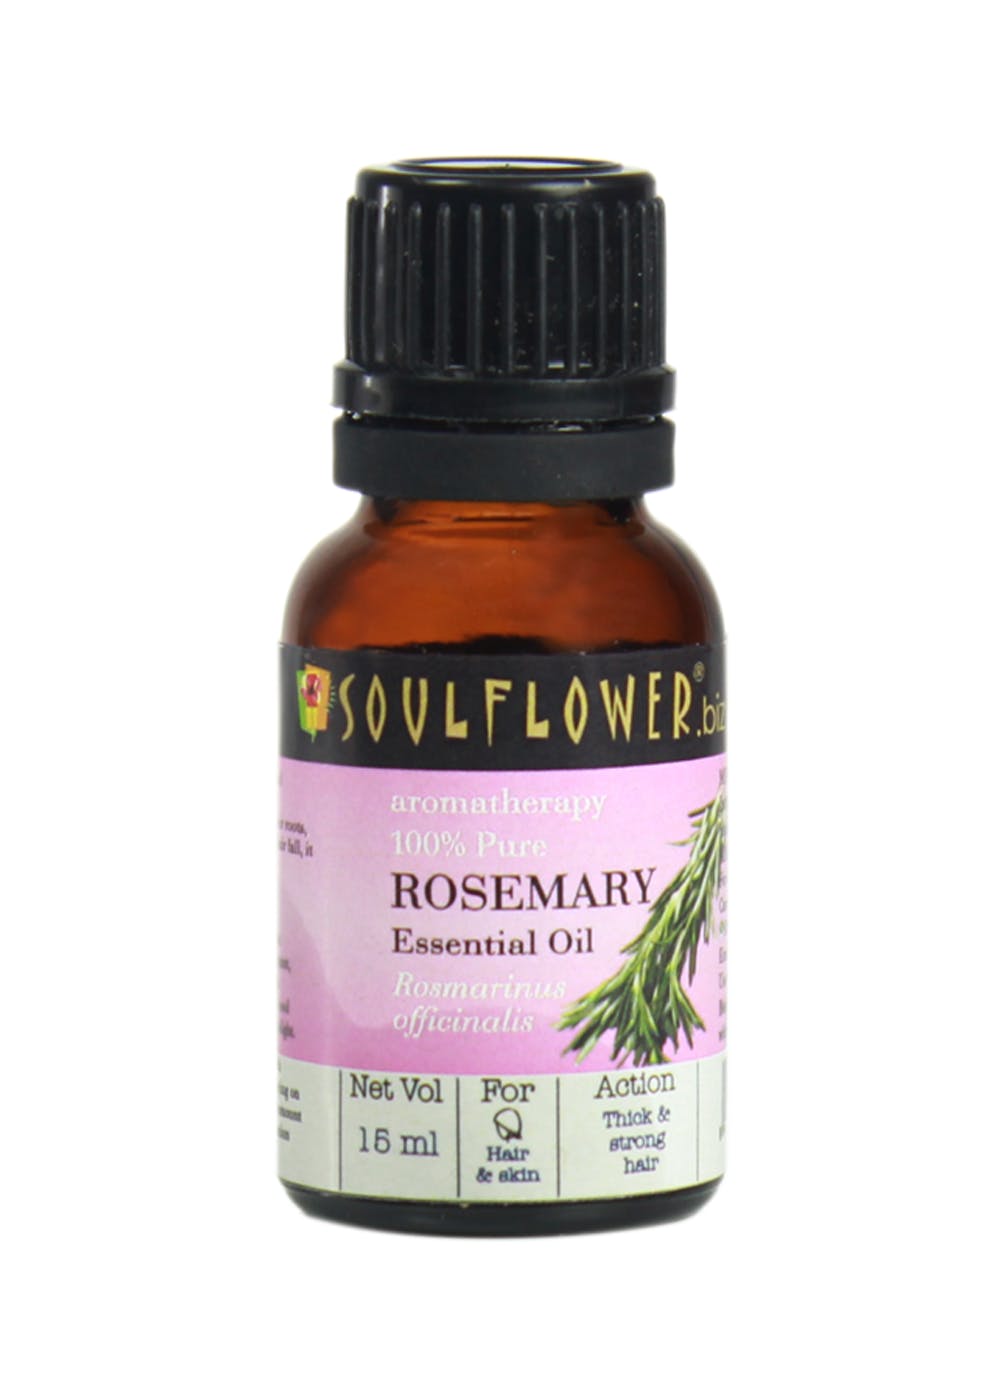 Essential Oil Rosemary (15ml)